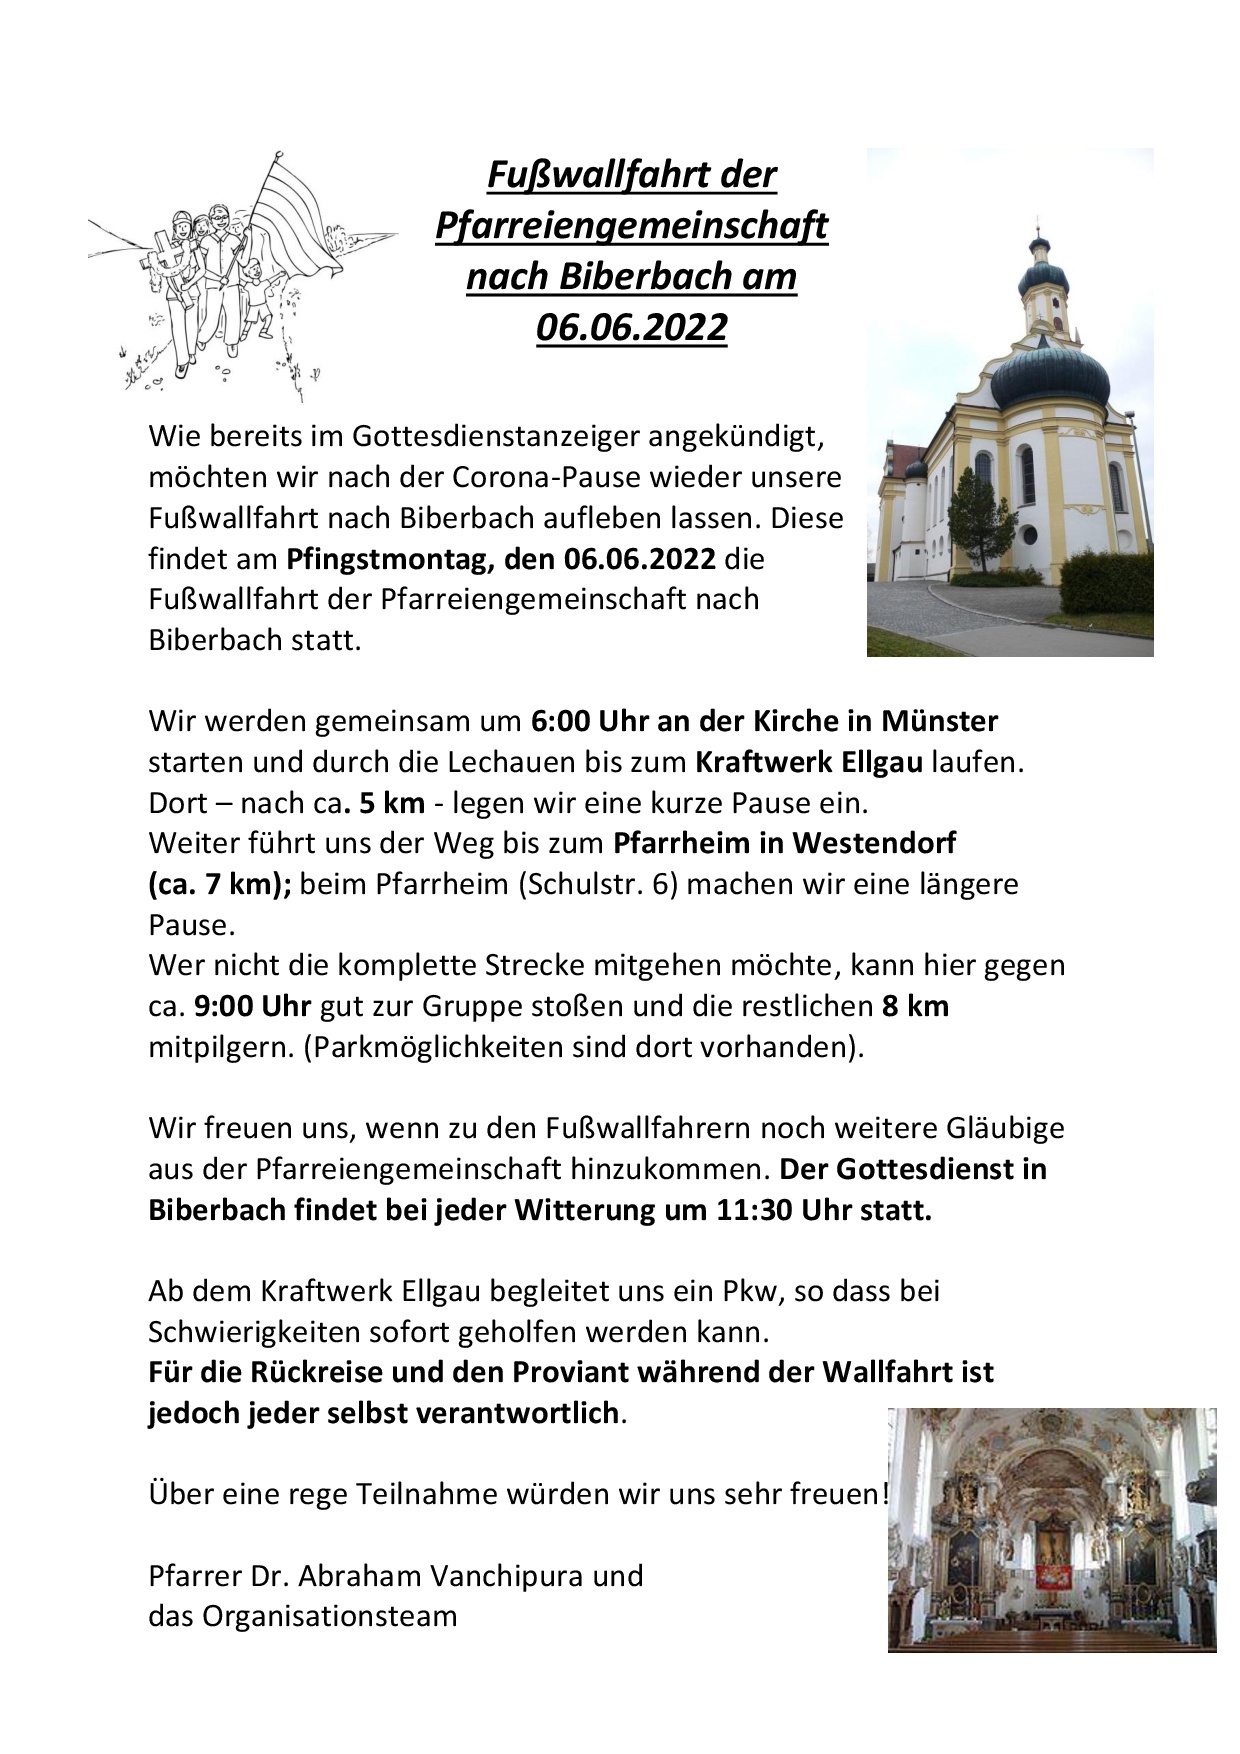 Fußwallfahrt nach Biberbach 2022